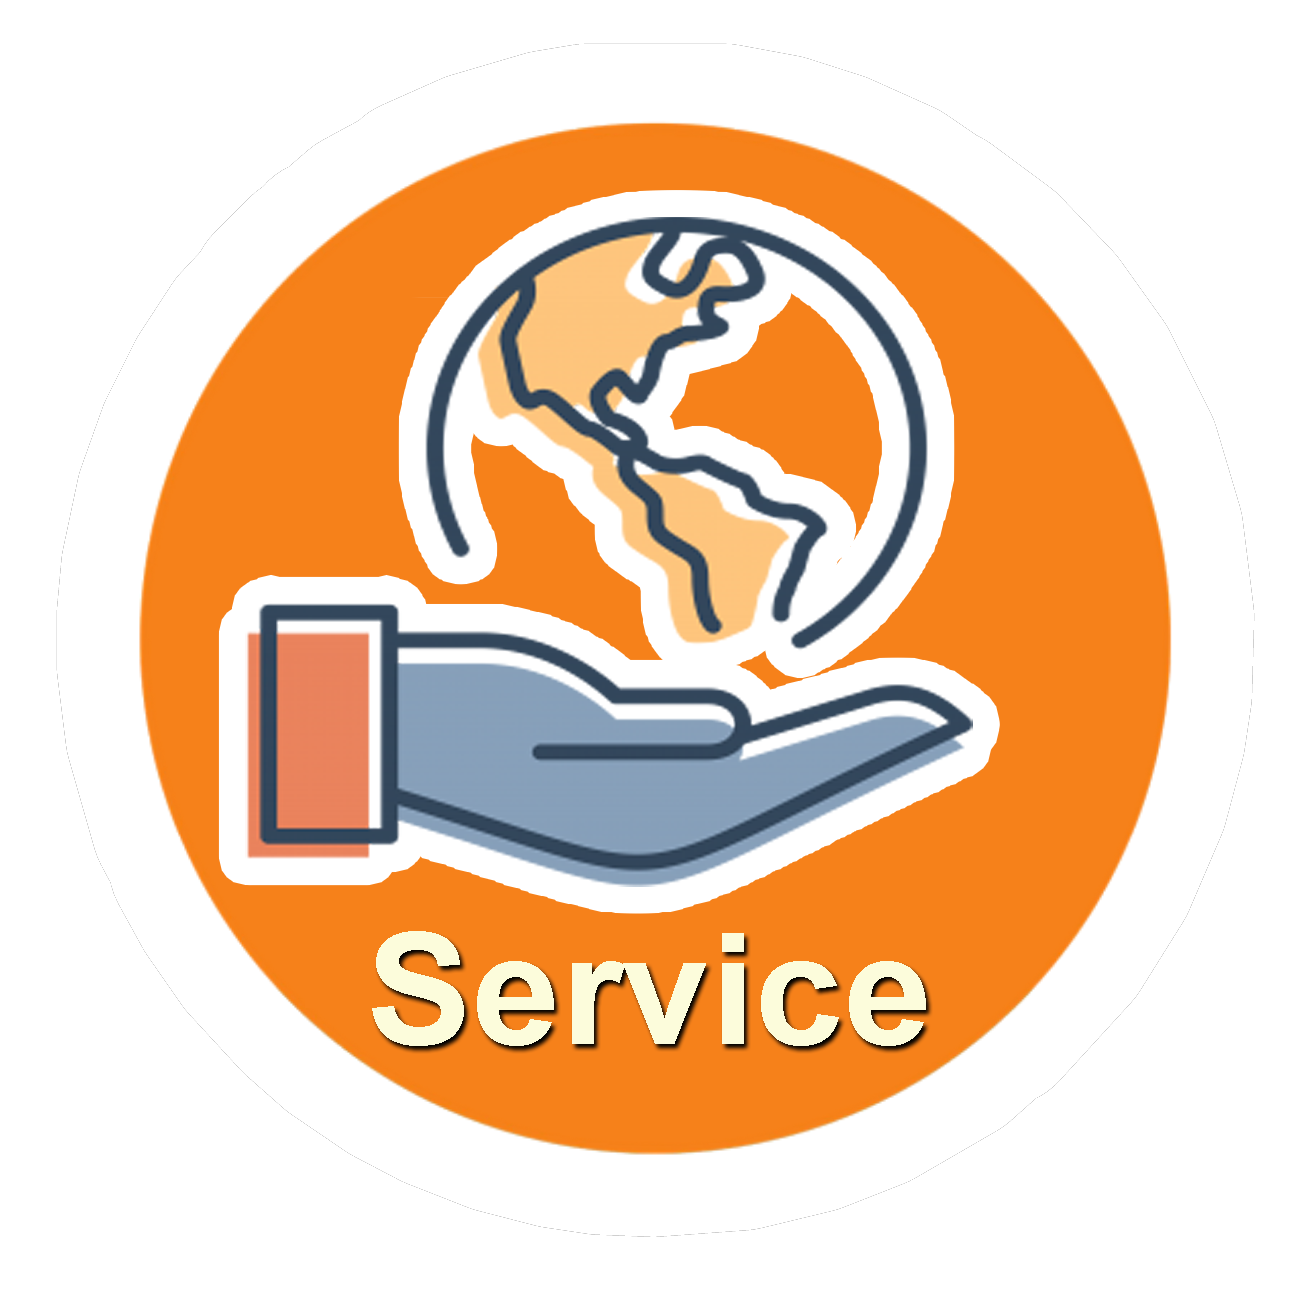   service   